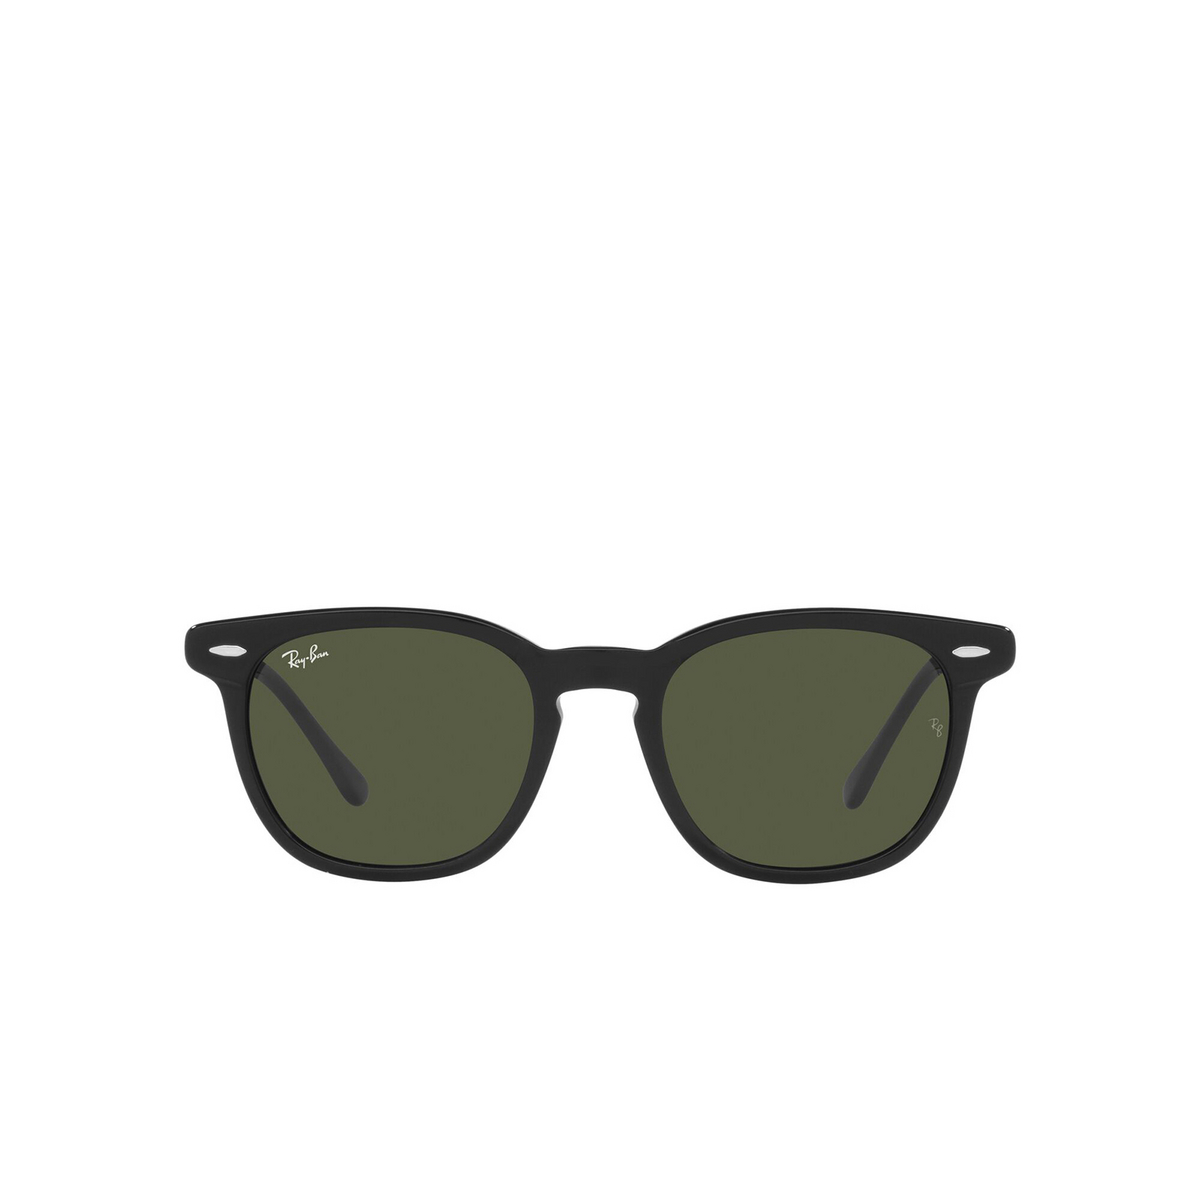 Ray-Ban HAWKEYE Sunglasses 901/31 Black - front view